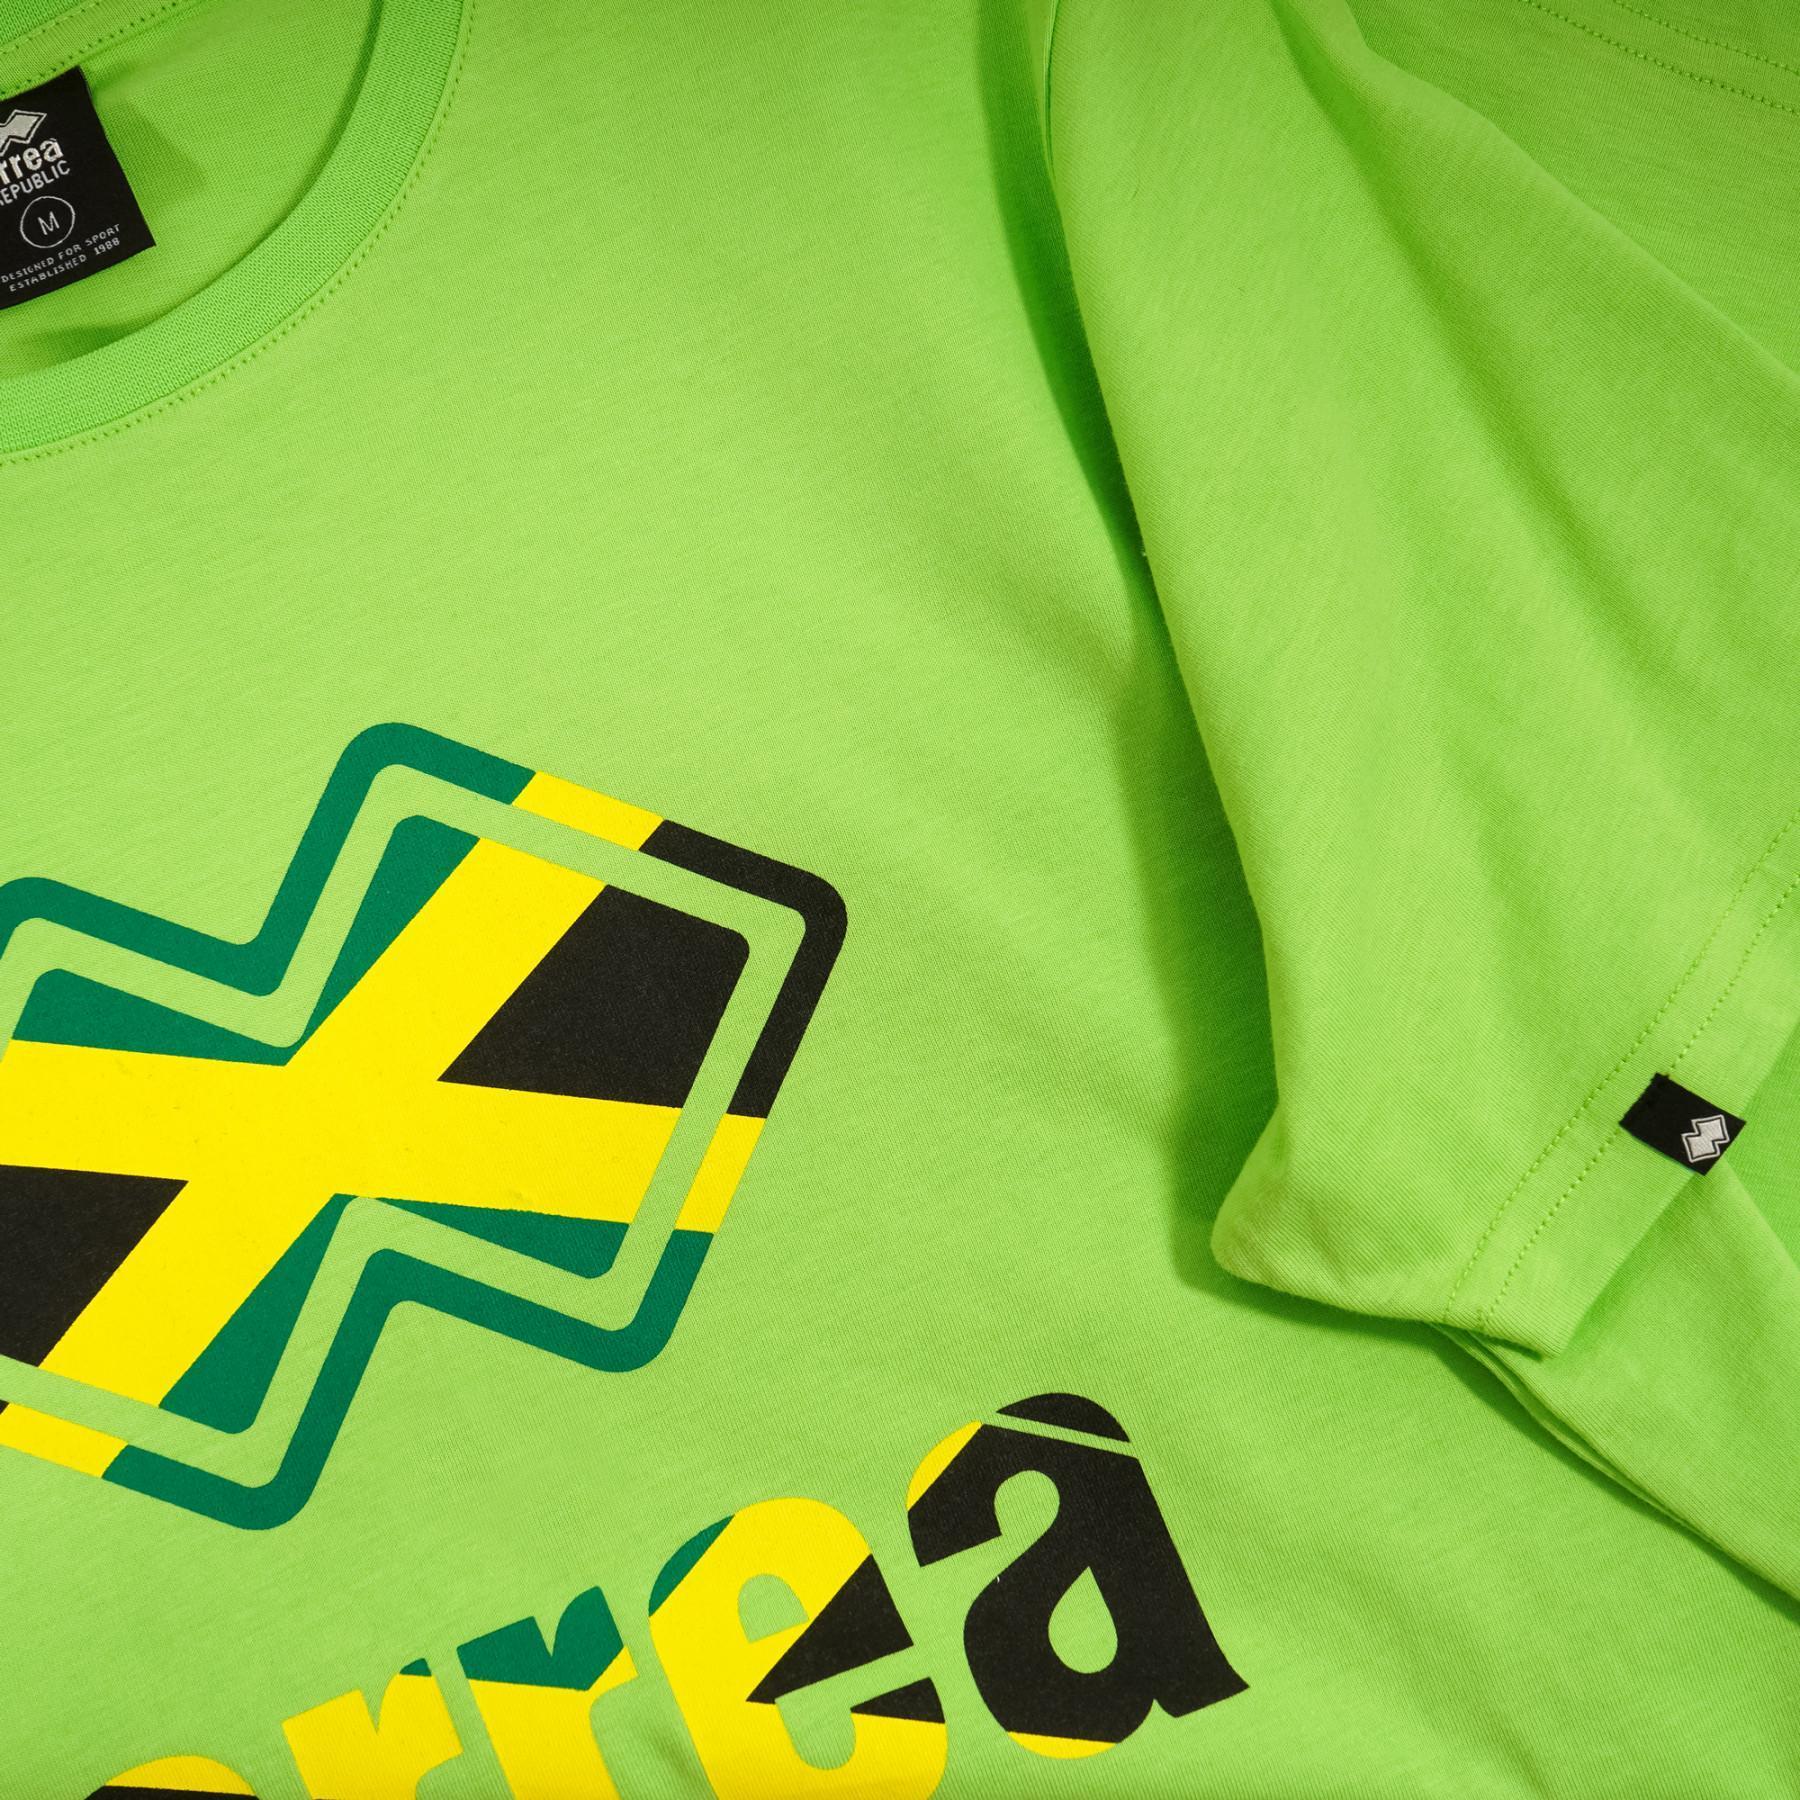 T-shirt Errea essential Jamaica